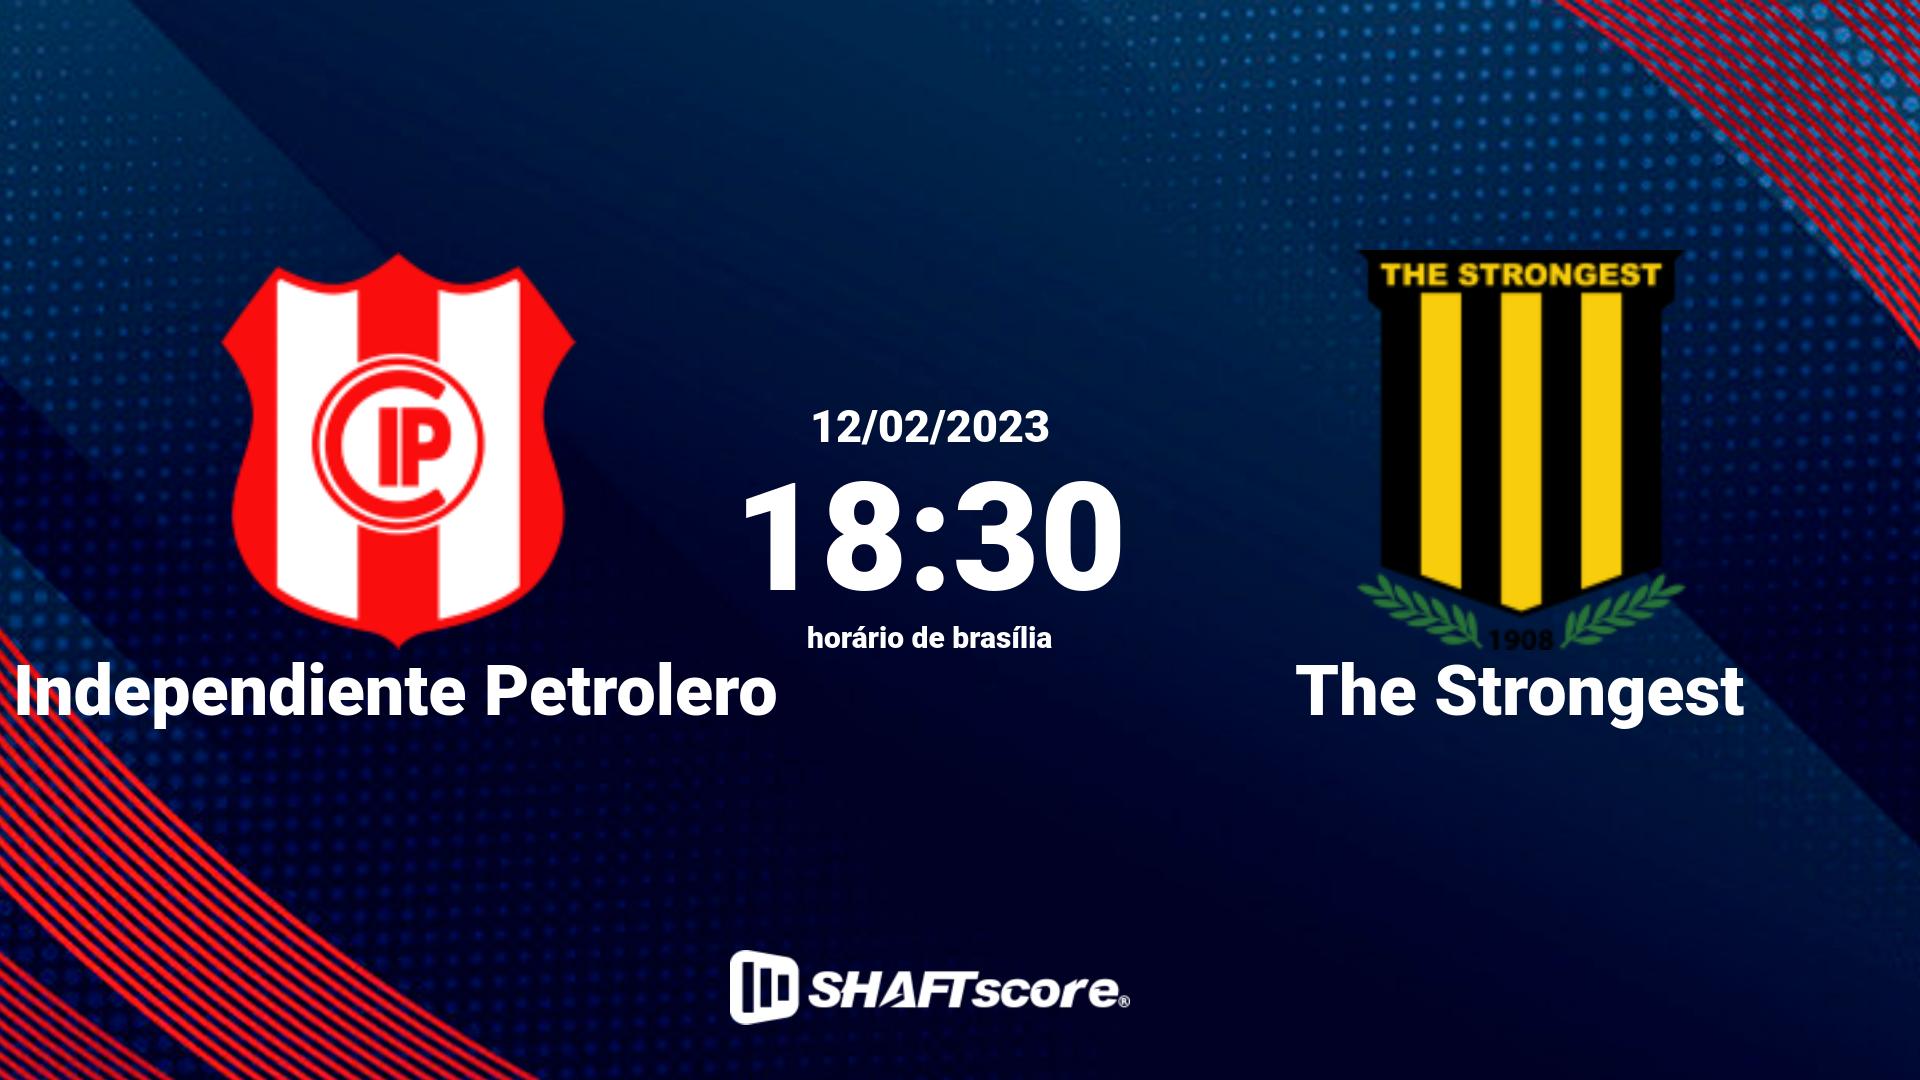 Estatísticas do jogo Independiente Petrolero vs The Strongest 12.02 18:30